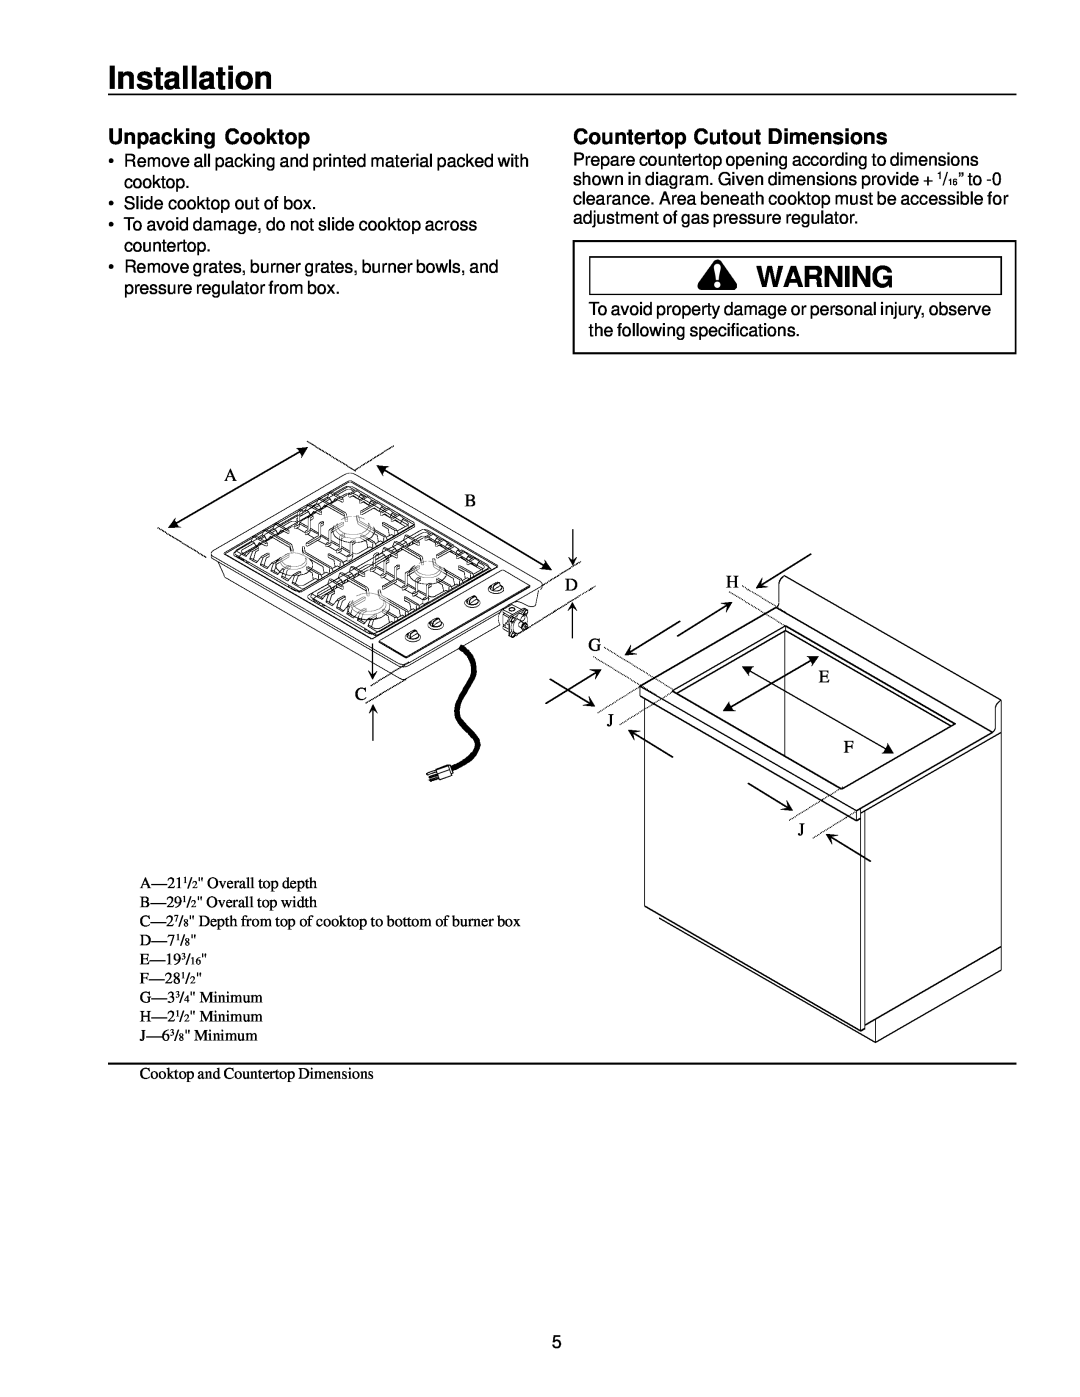 Amana AKS3020 owner manual Installation, Unpacking Cooktop, Countertop Cutout Dimensions 